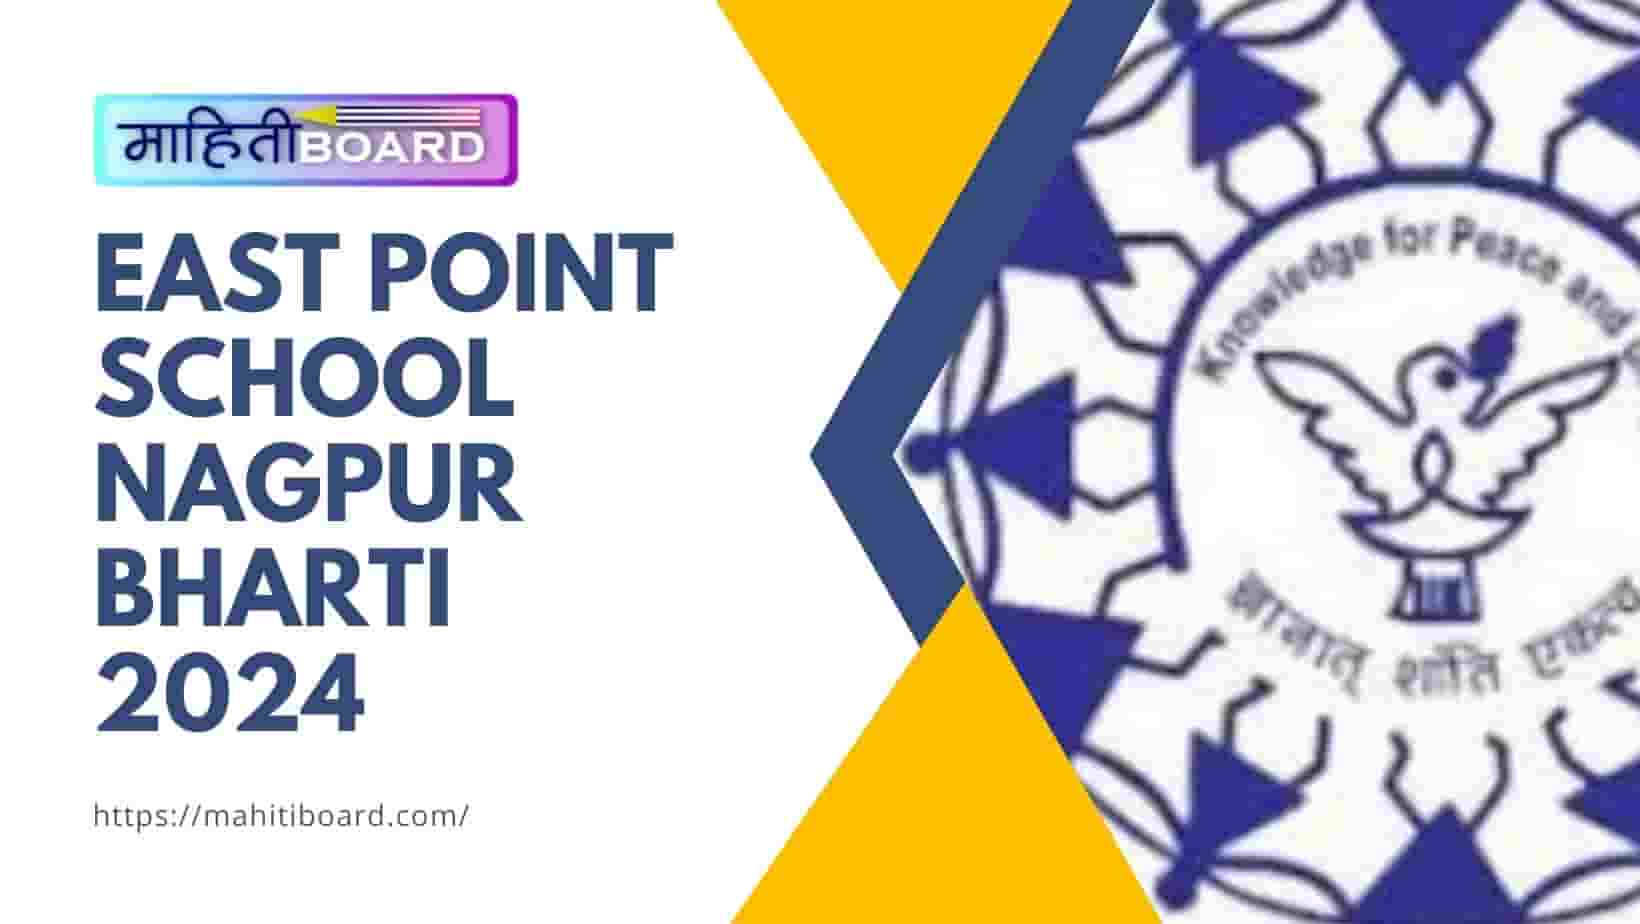 East Point School Nagpur Bharti 2024